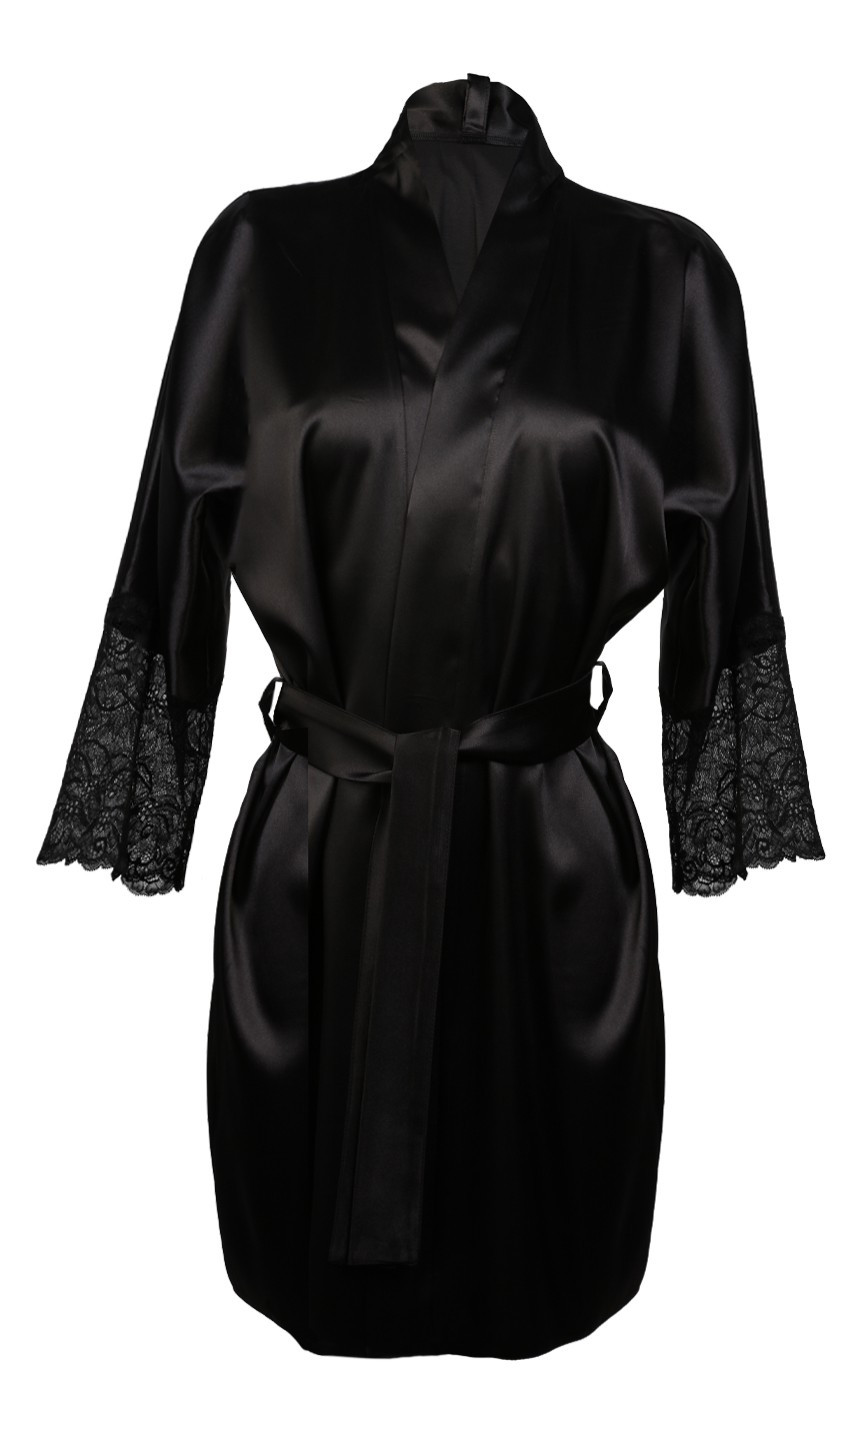 Dámský župan Housecoat model 16664236 Black XS černá - DKaren